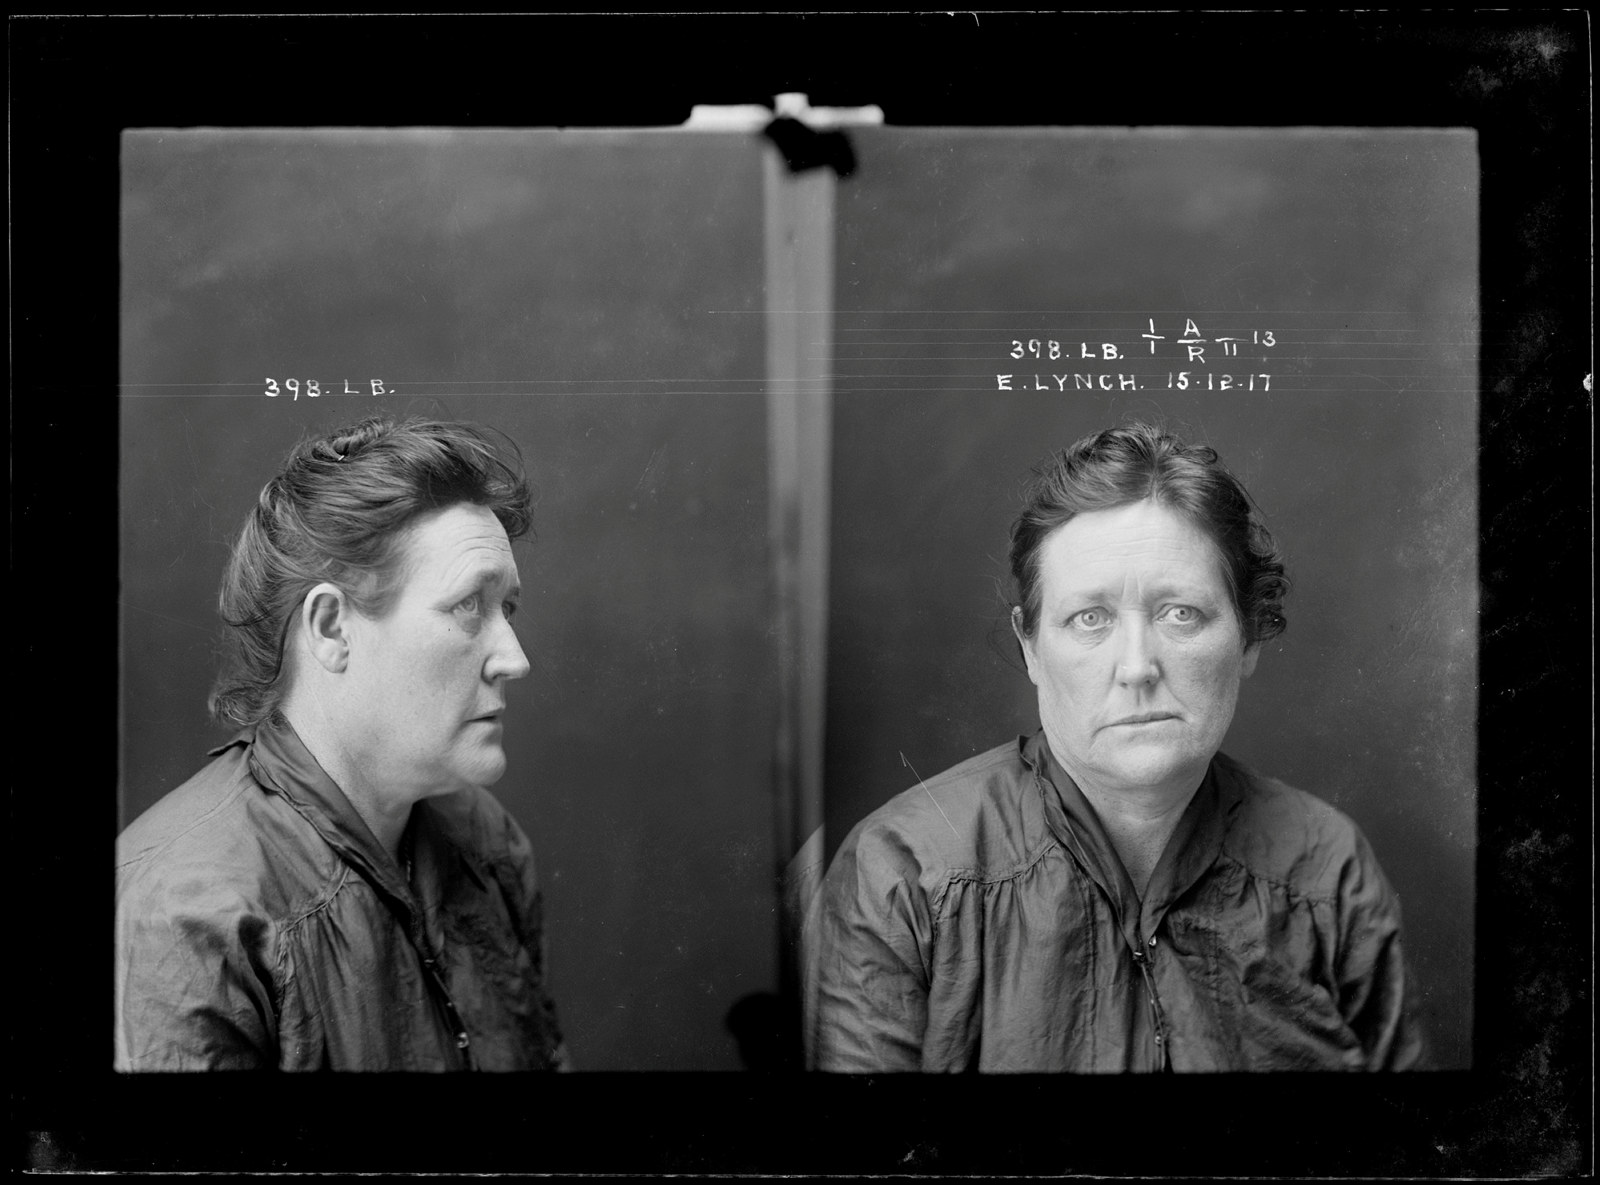 Eva Lynch, criminal record number 398LB, 15 December 1917. State Reformatory for Women, Long Bay.